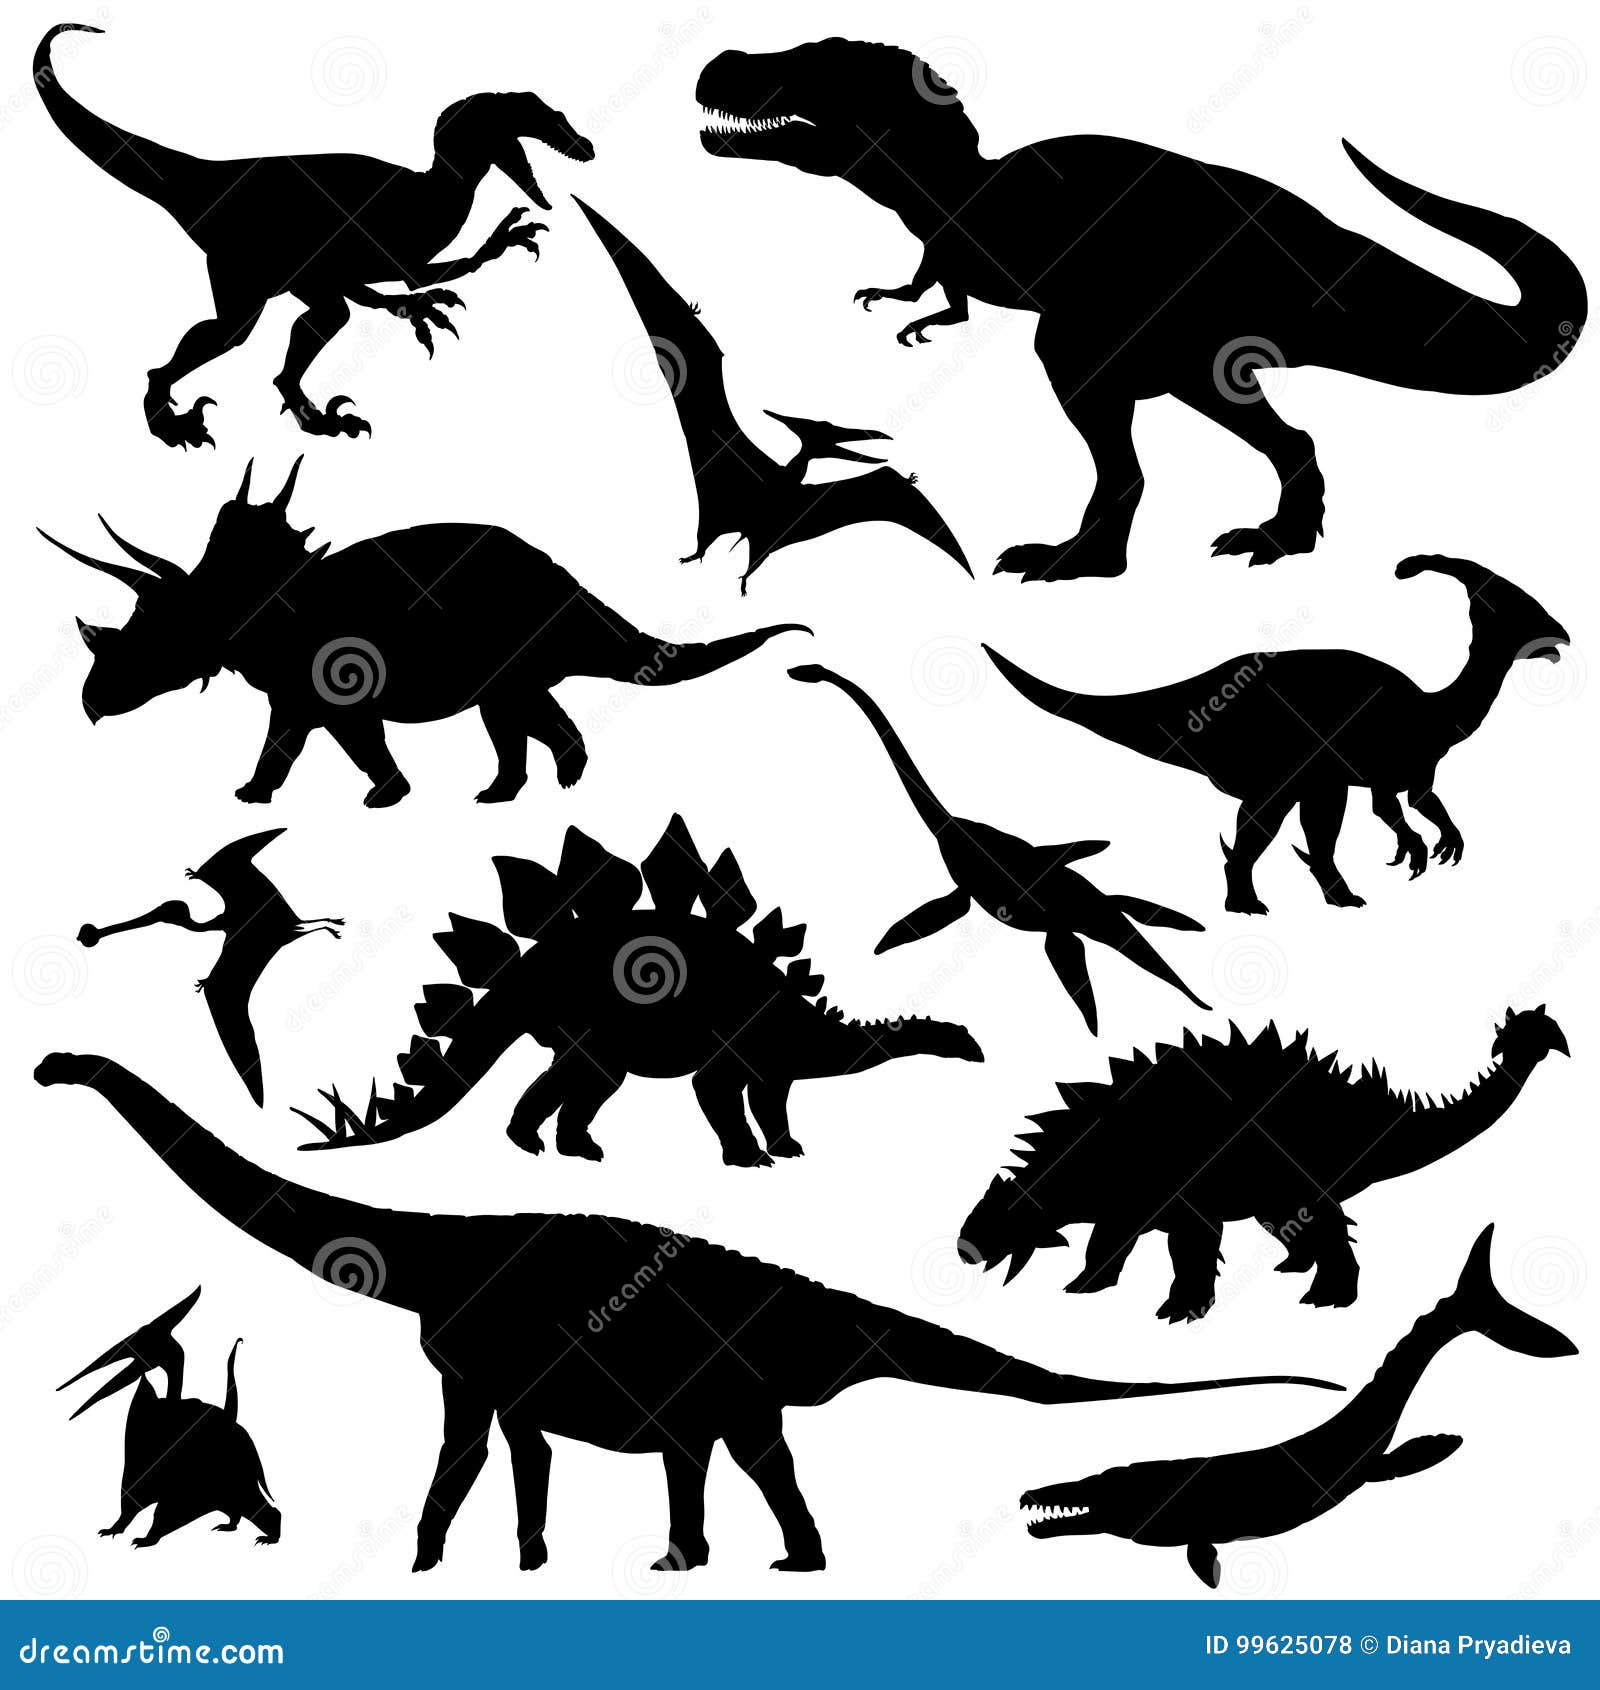 dinosaur silhouettes set.